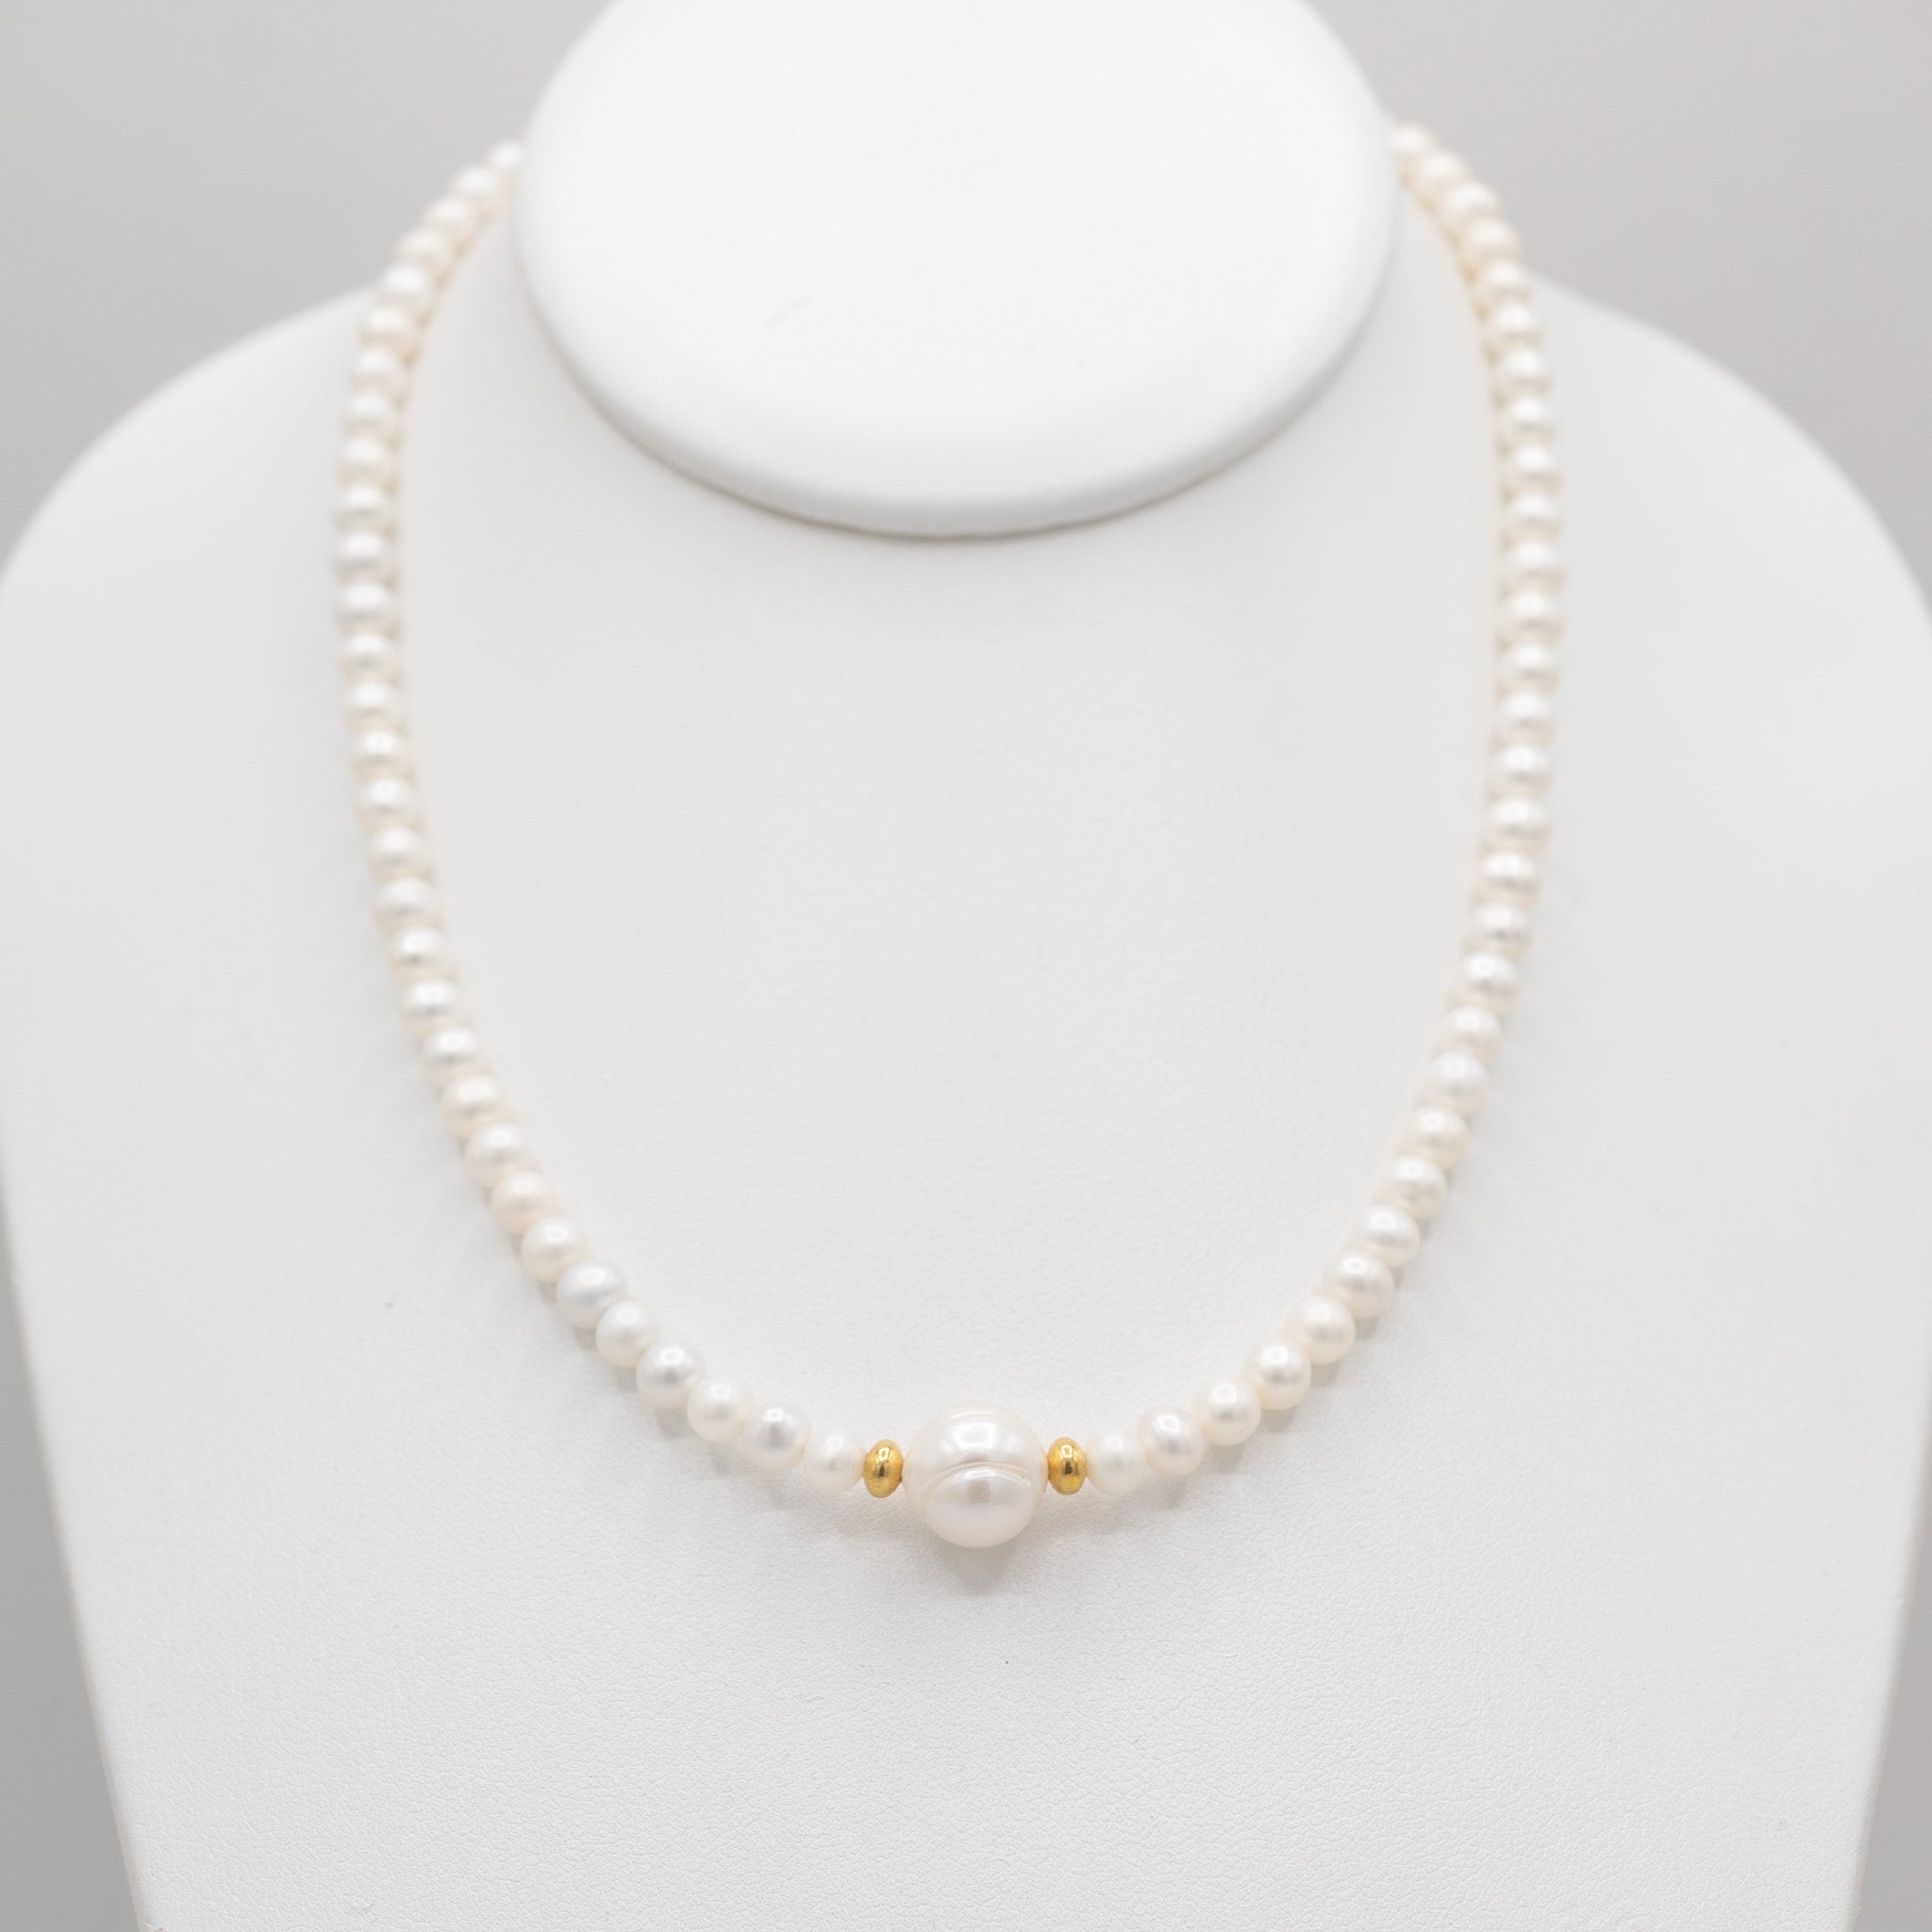 Freshwater Pearl 6mm Necklace - Jewel Ya